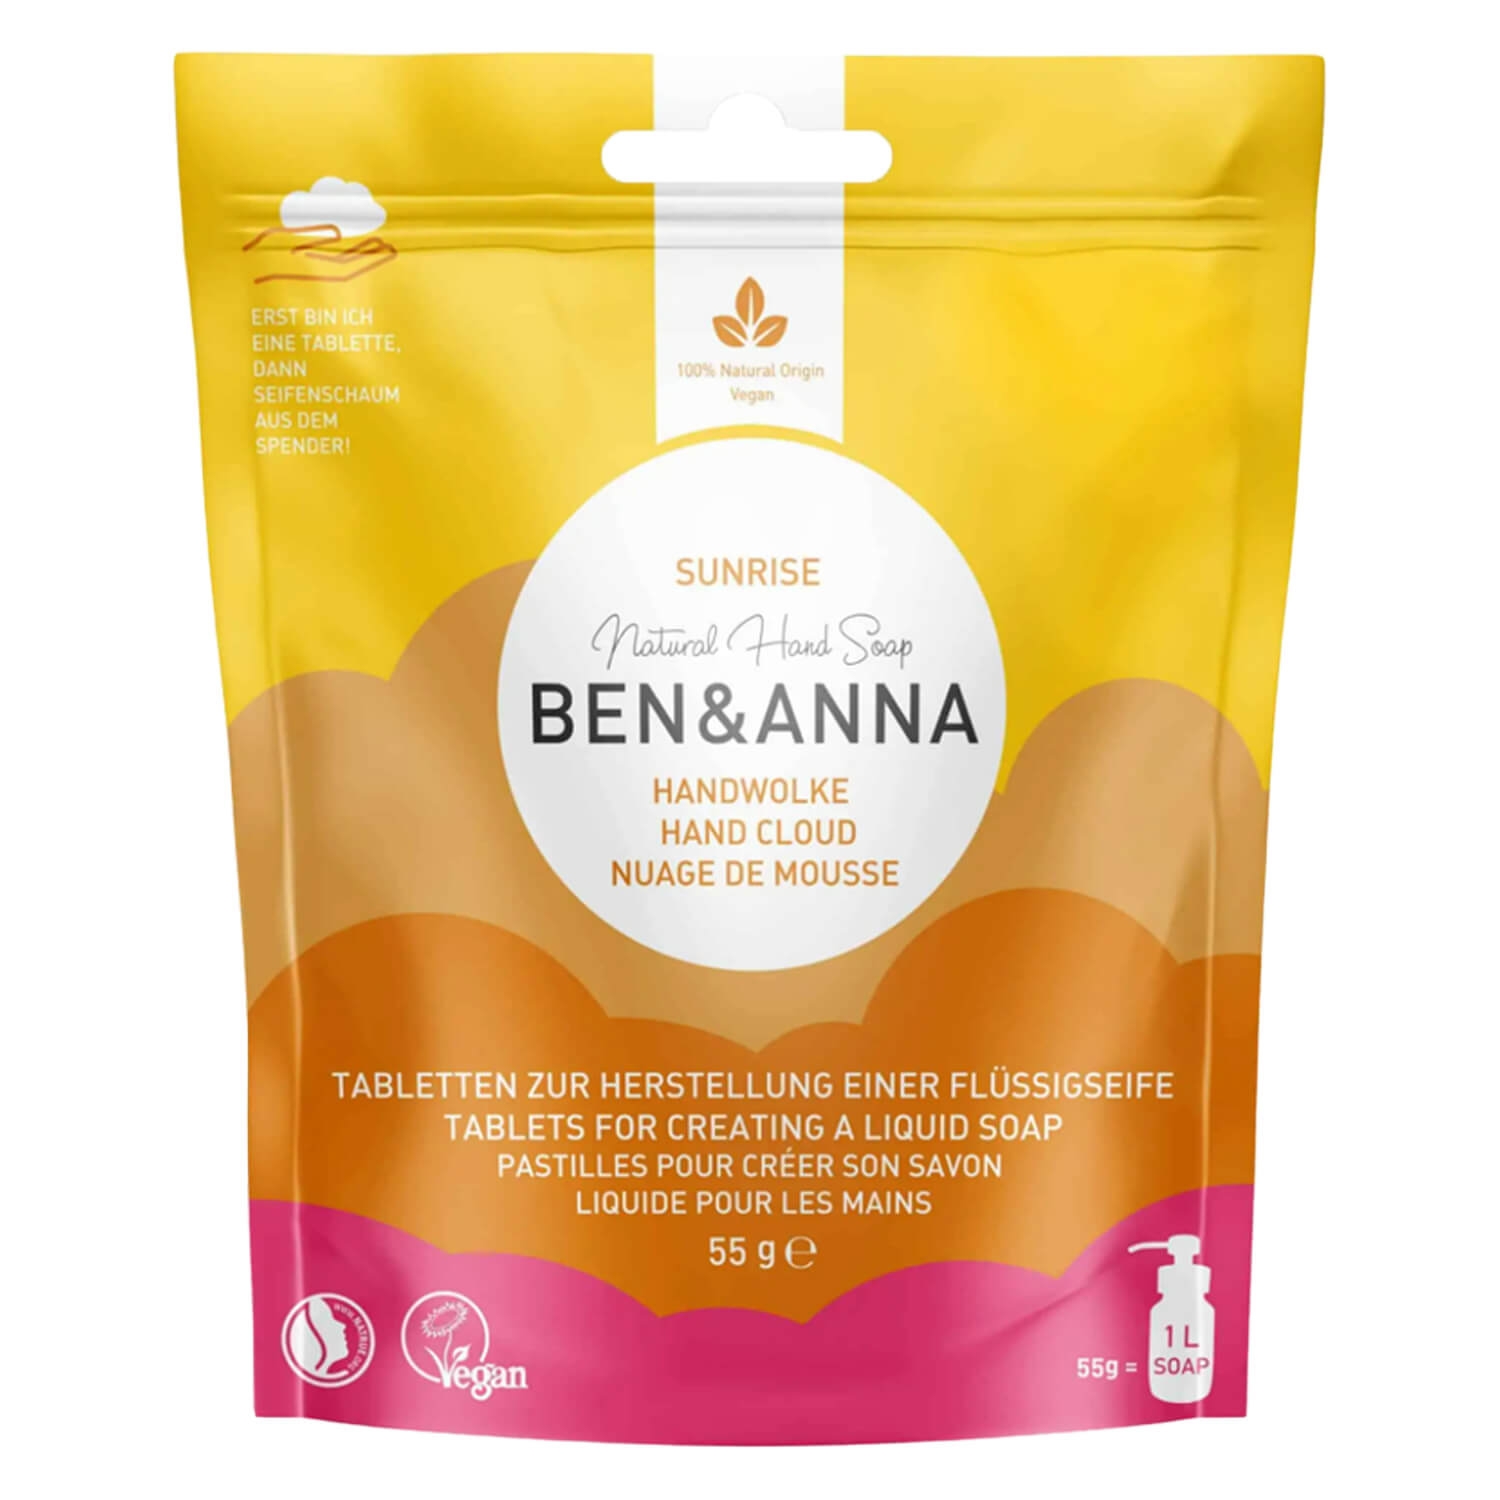 Product image from BEN&ANNA - Handwolke Sunrise